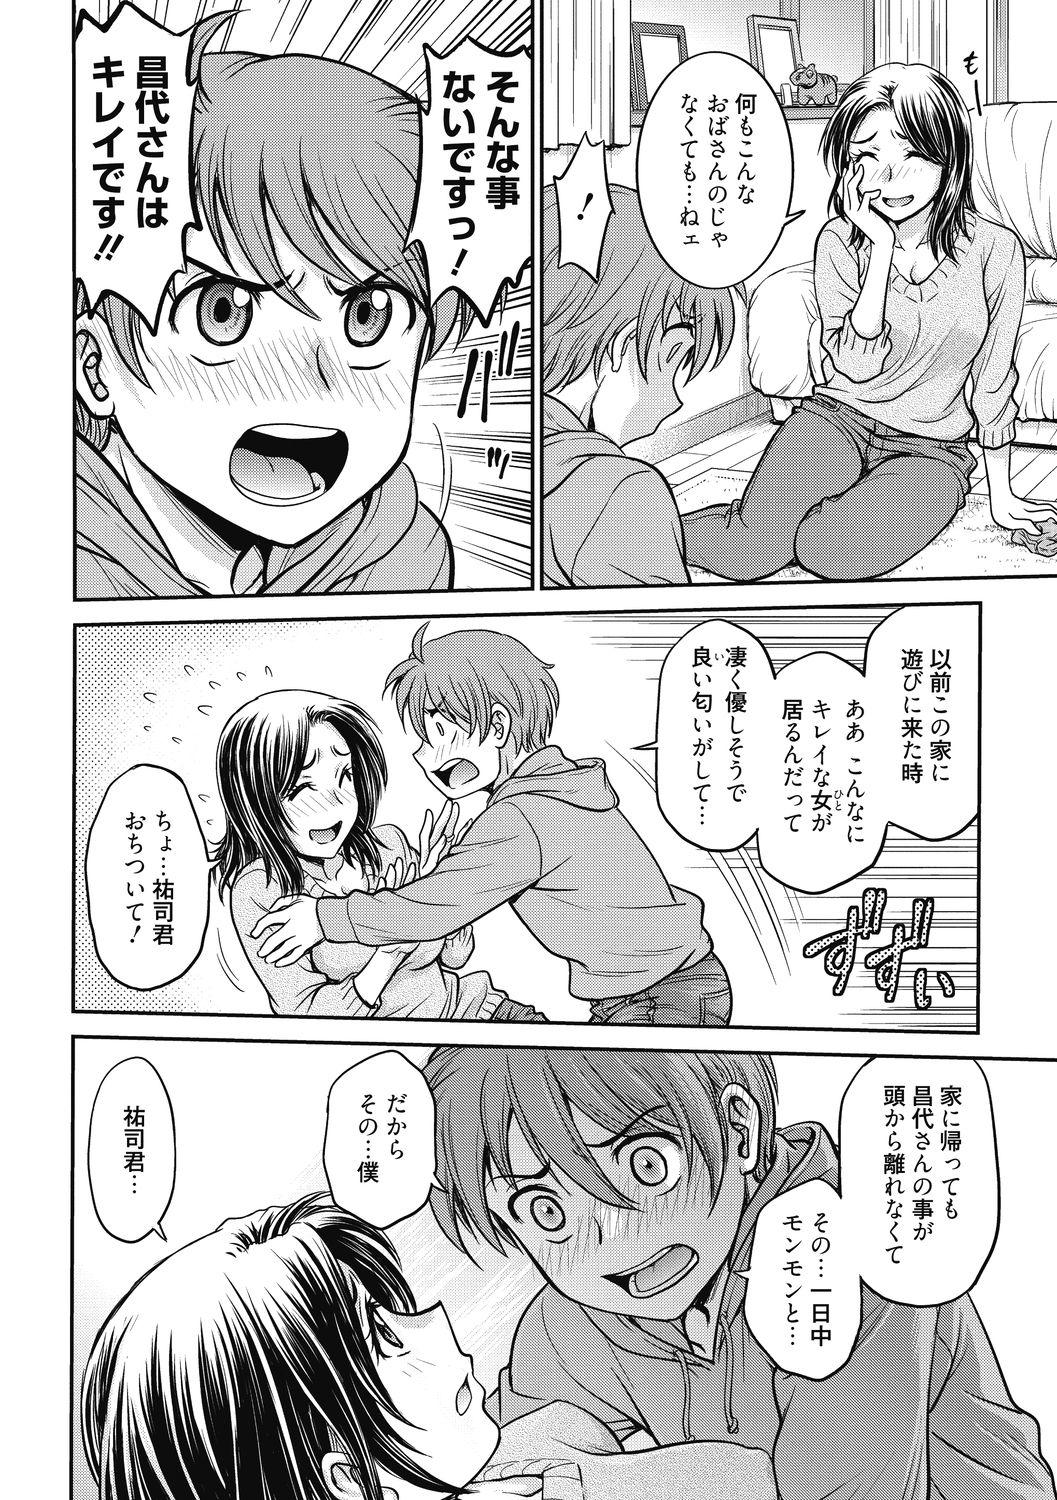 Kanojo no Shitagi o Nusundara... - I tried to steal her underwear... 3